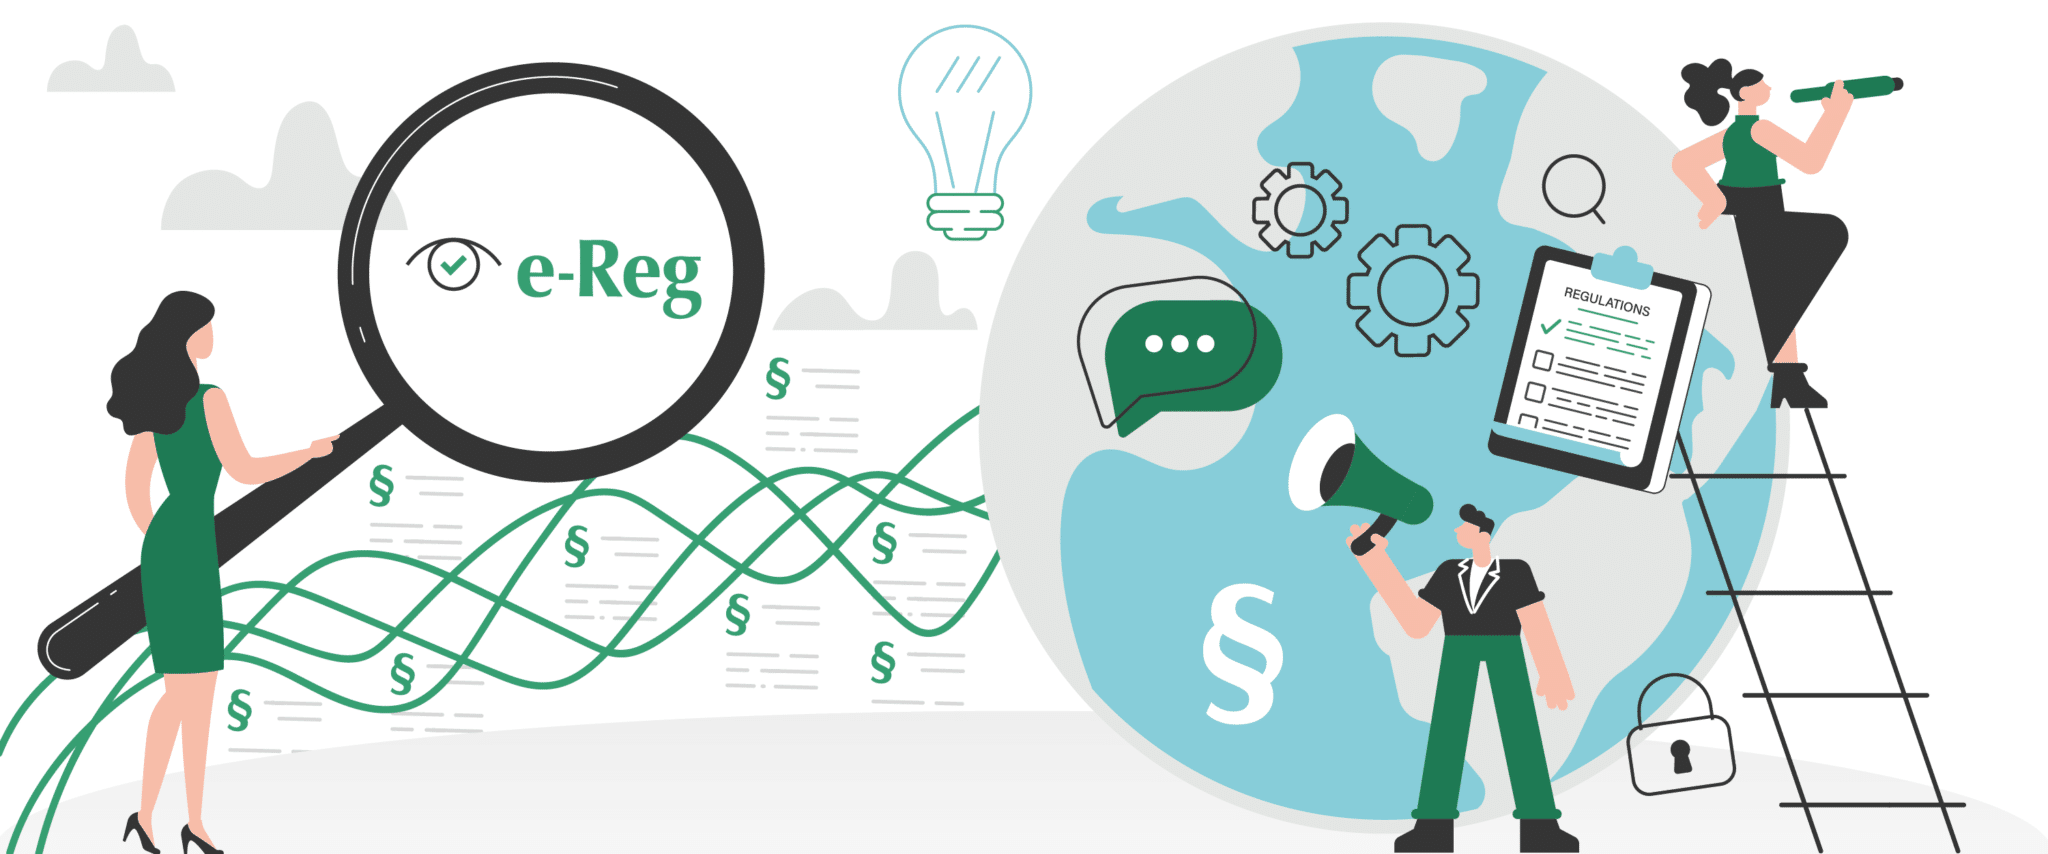 Regulatory research and RegTech